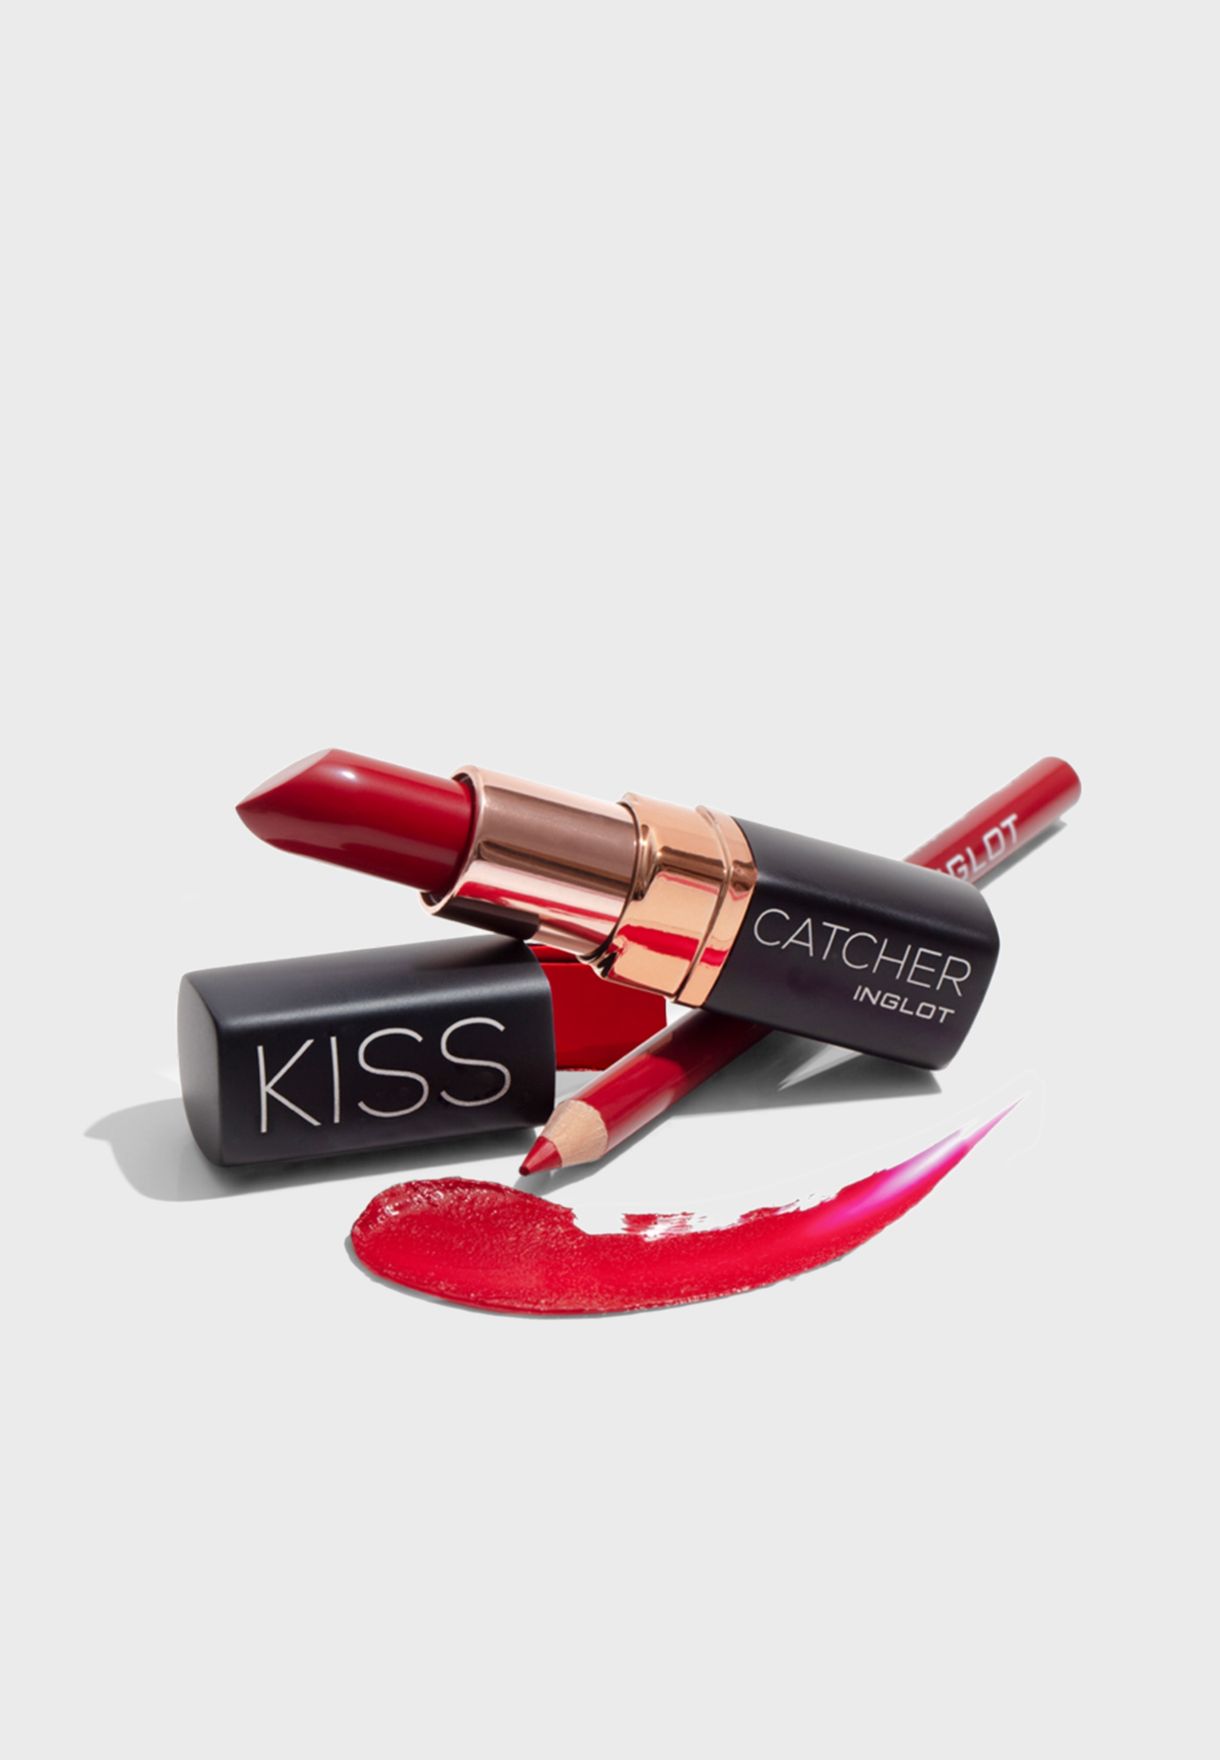 Kiss Catcher Lip Kit - Tango Kiss 26% Savings